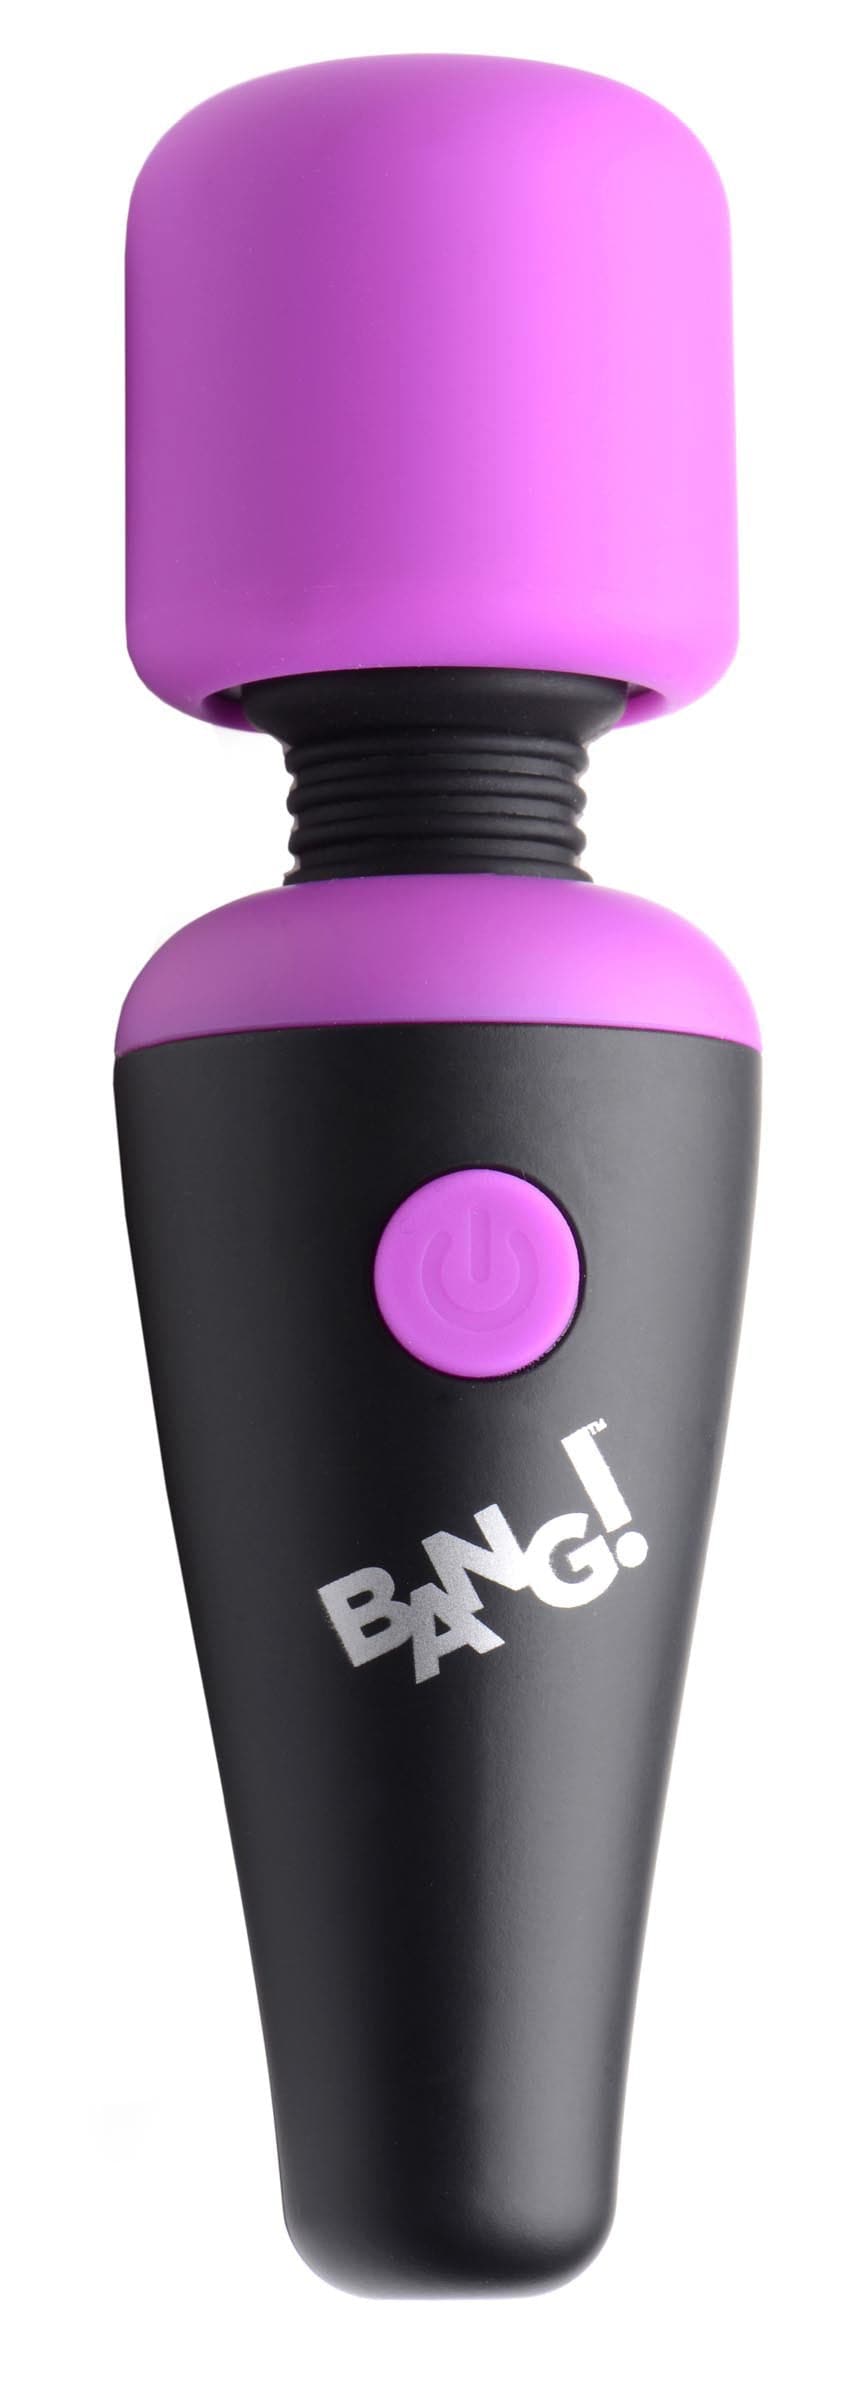 bang 10x vibrating mini silicone wand purple